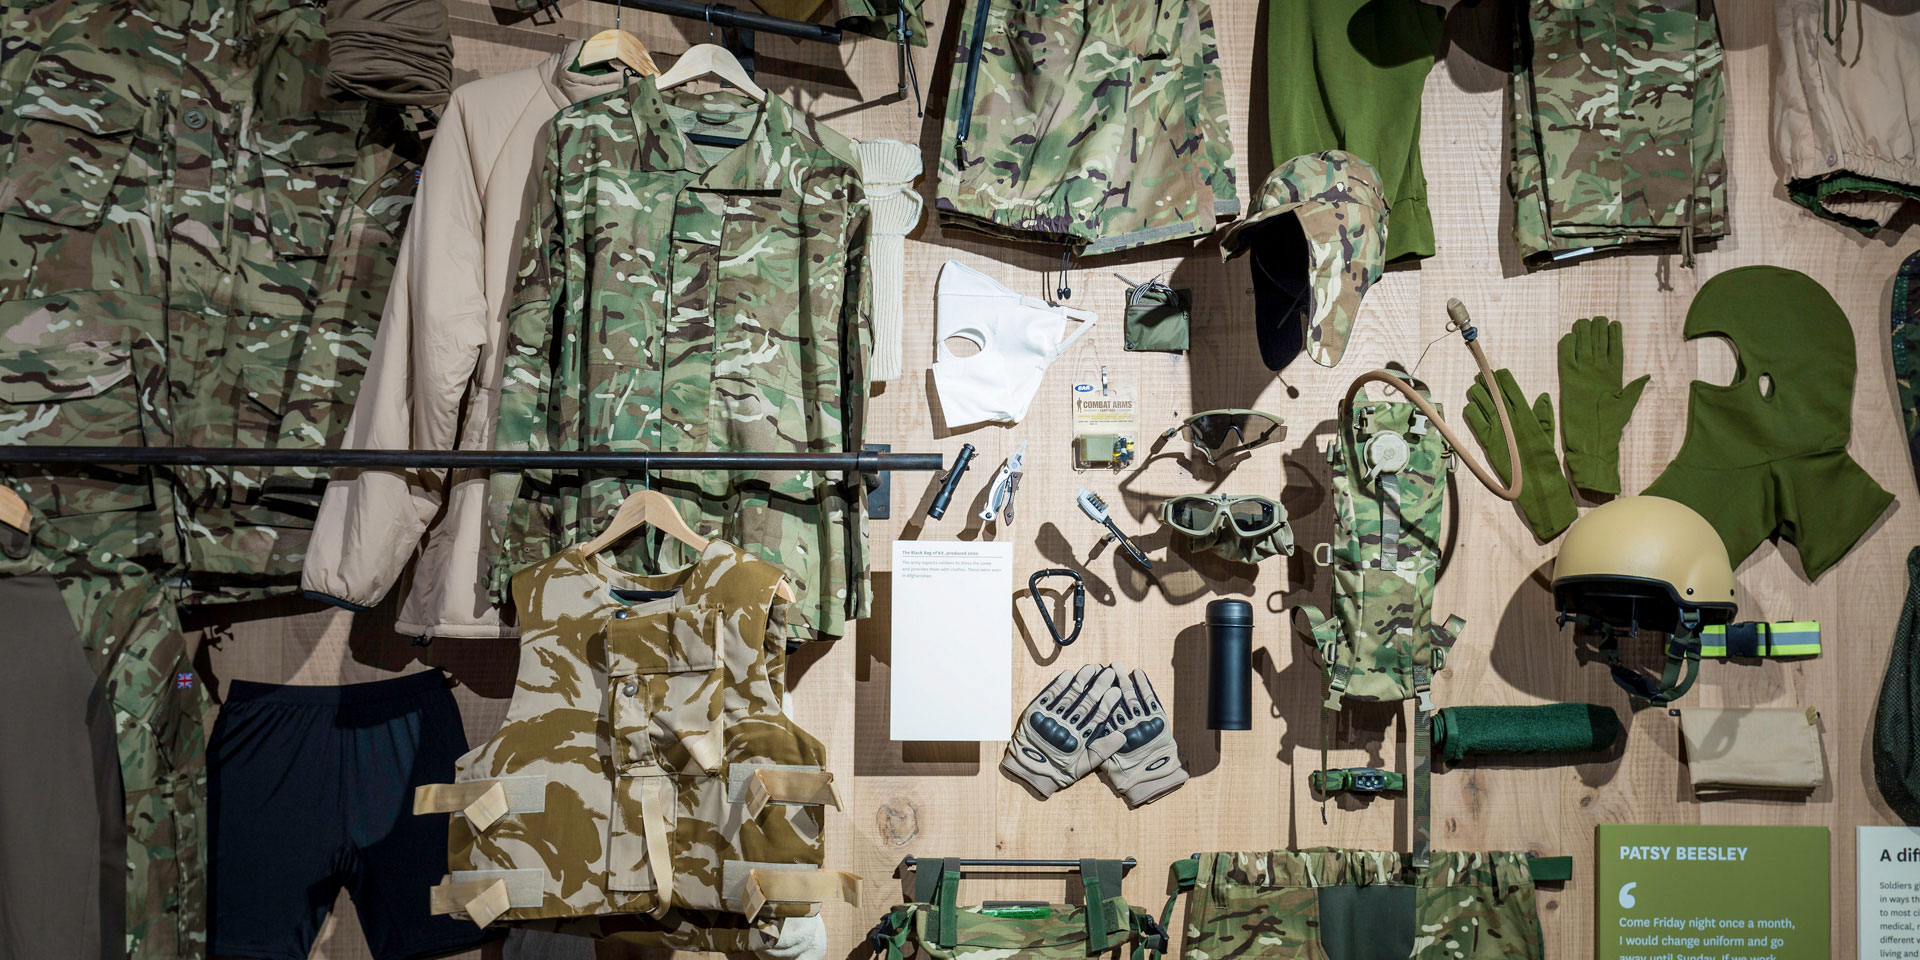 Uniform on display in soldier gallery